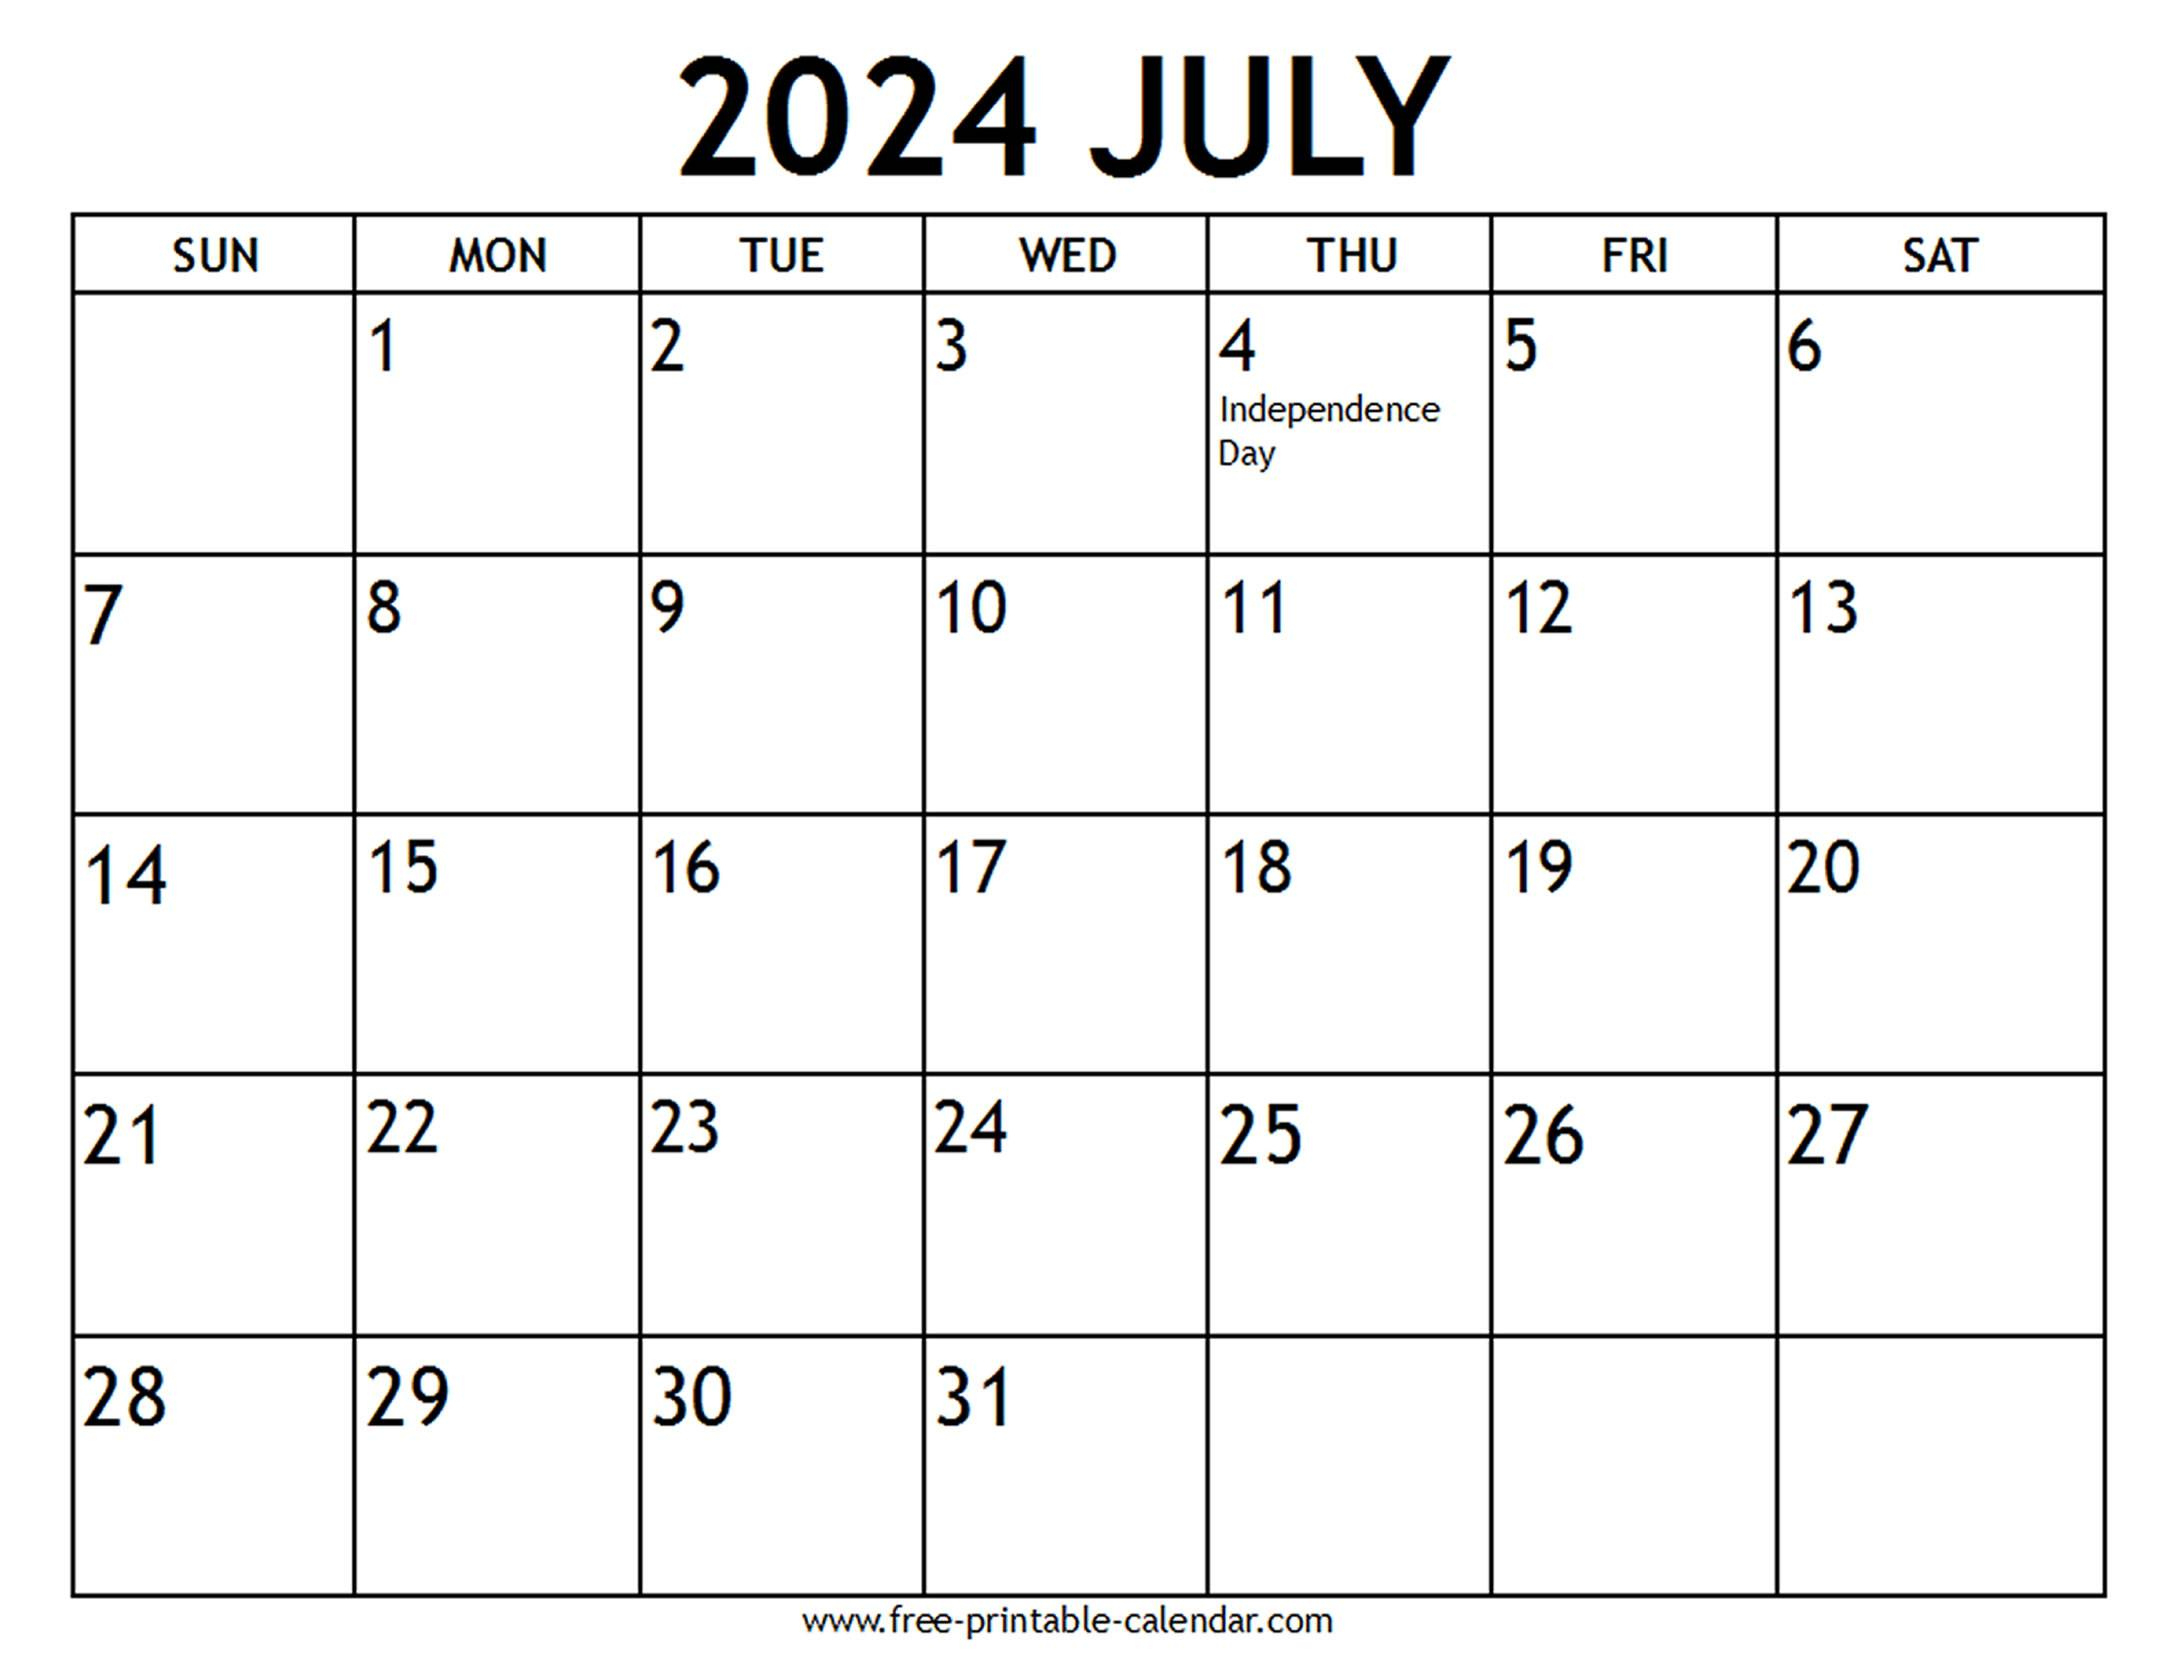 July 2024 Calendar Us Holidays - Free-Printable-Calendar | Free Printable July 2024 Calendar With Holidays